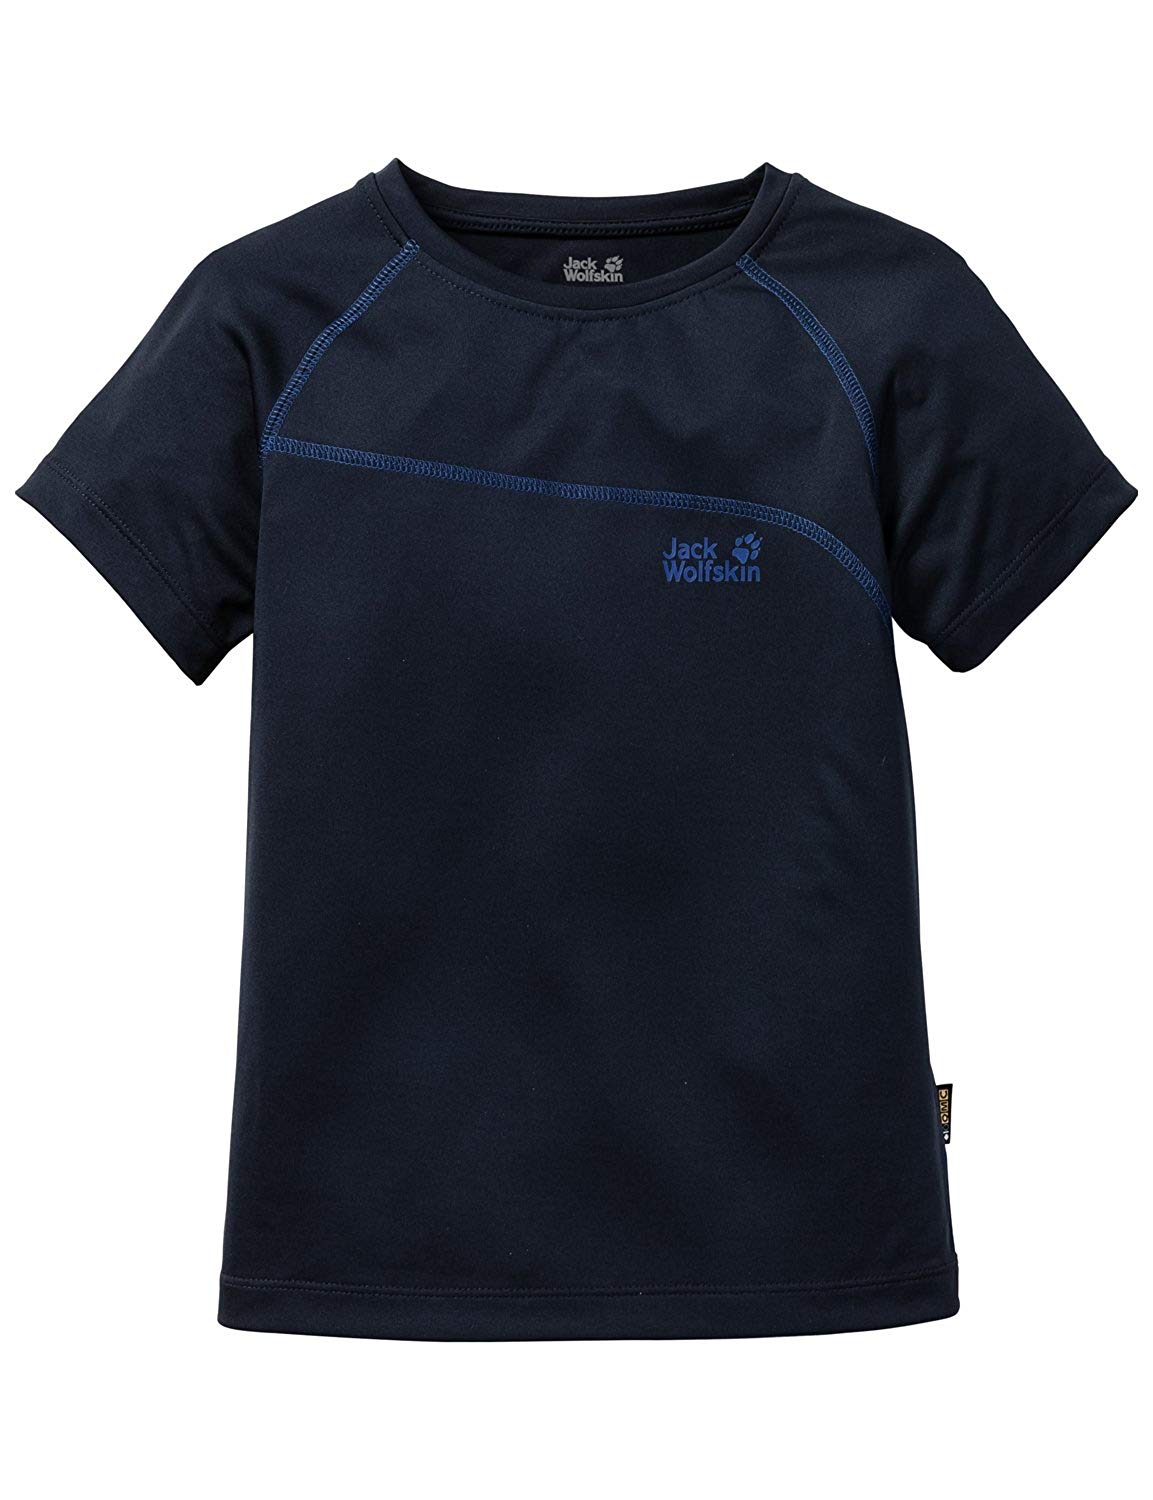 Jack Wolfskin Active B T-Shirt 128cm for Kids